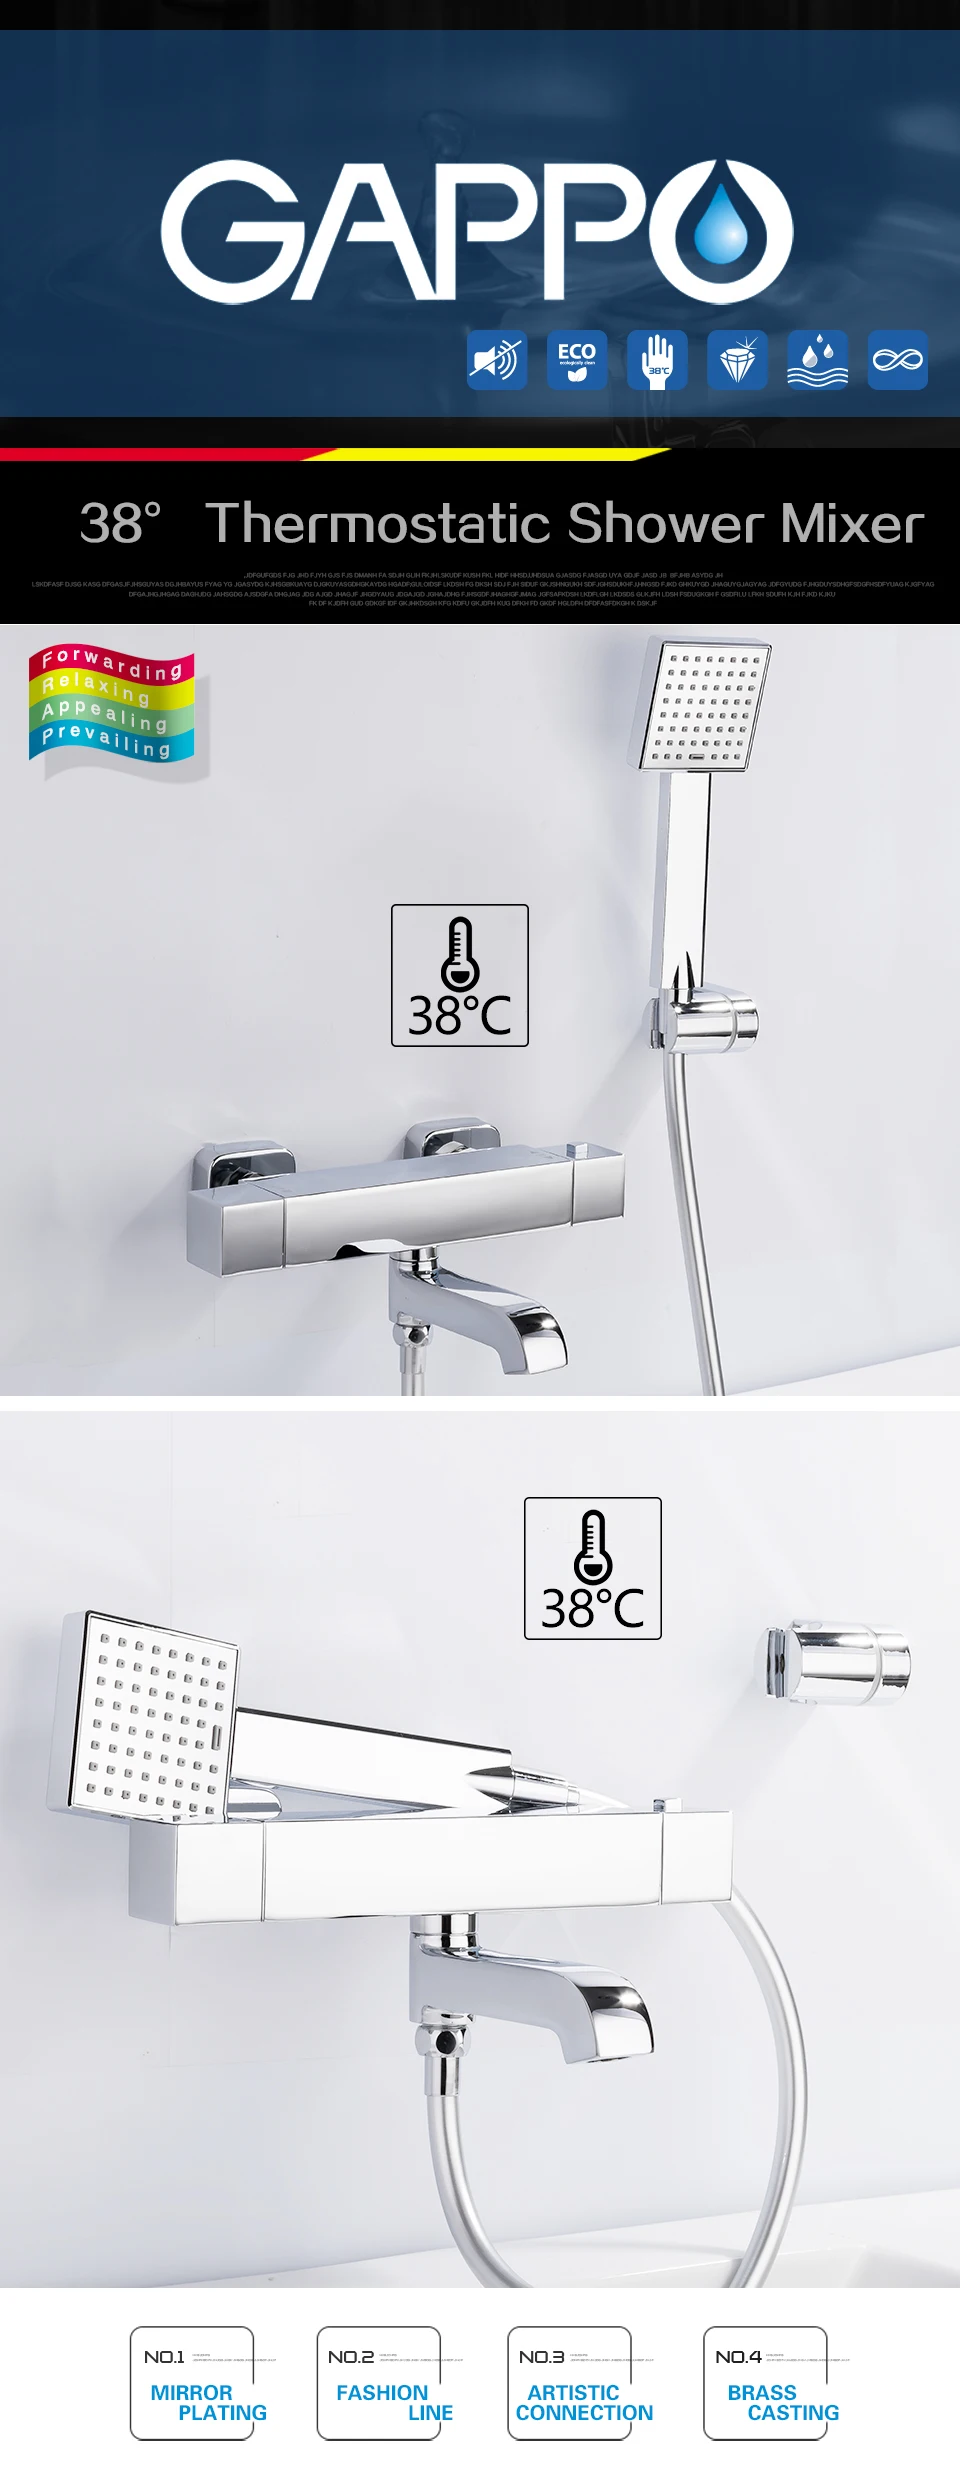 GAPPO смеситель для душа s настенный смеситель для ванной комнаты Водопад Термостатический смеситель для душа смеситель для ванны кран для ванны набор для ванны